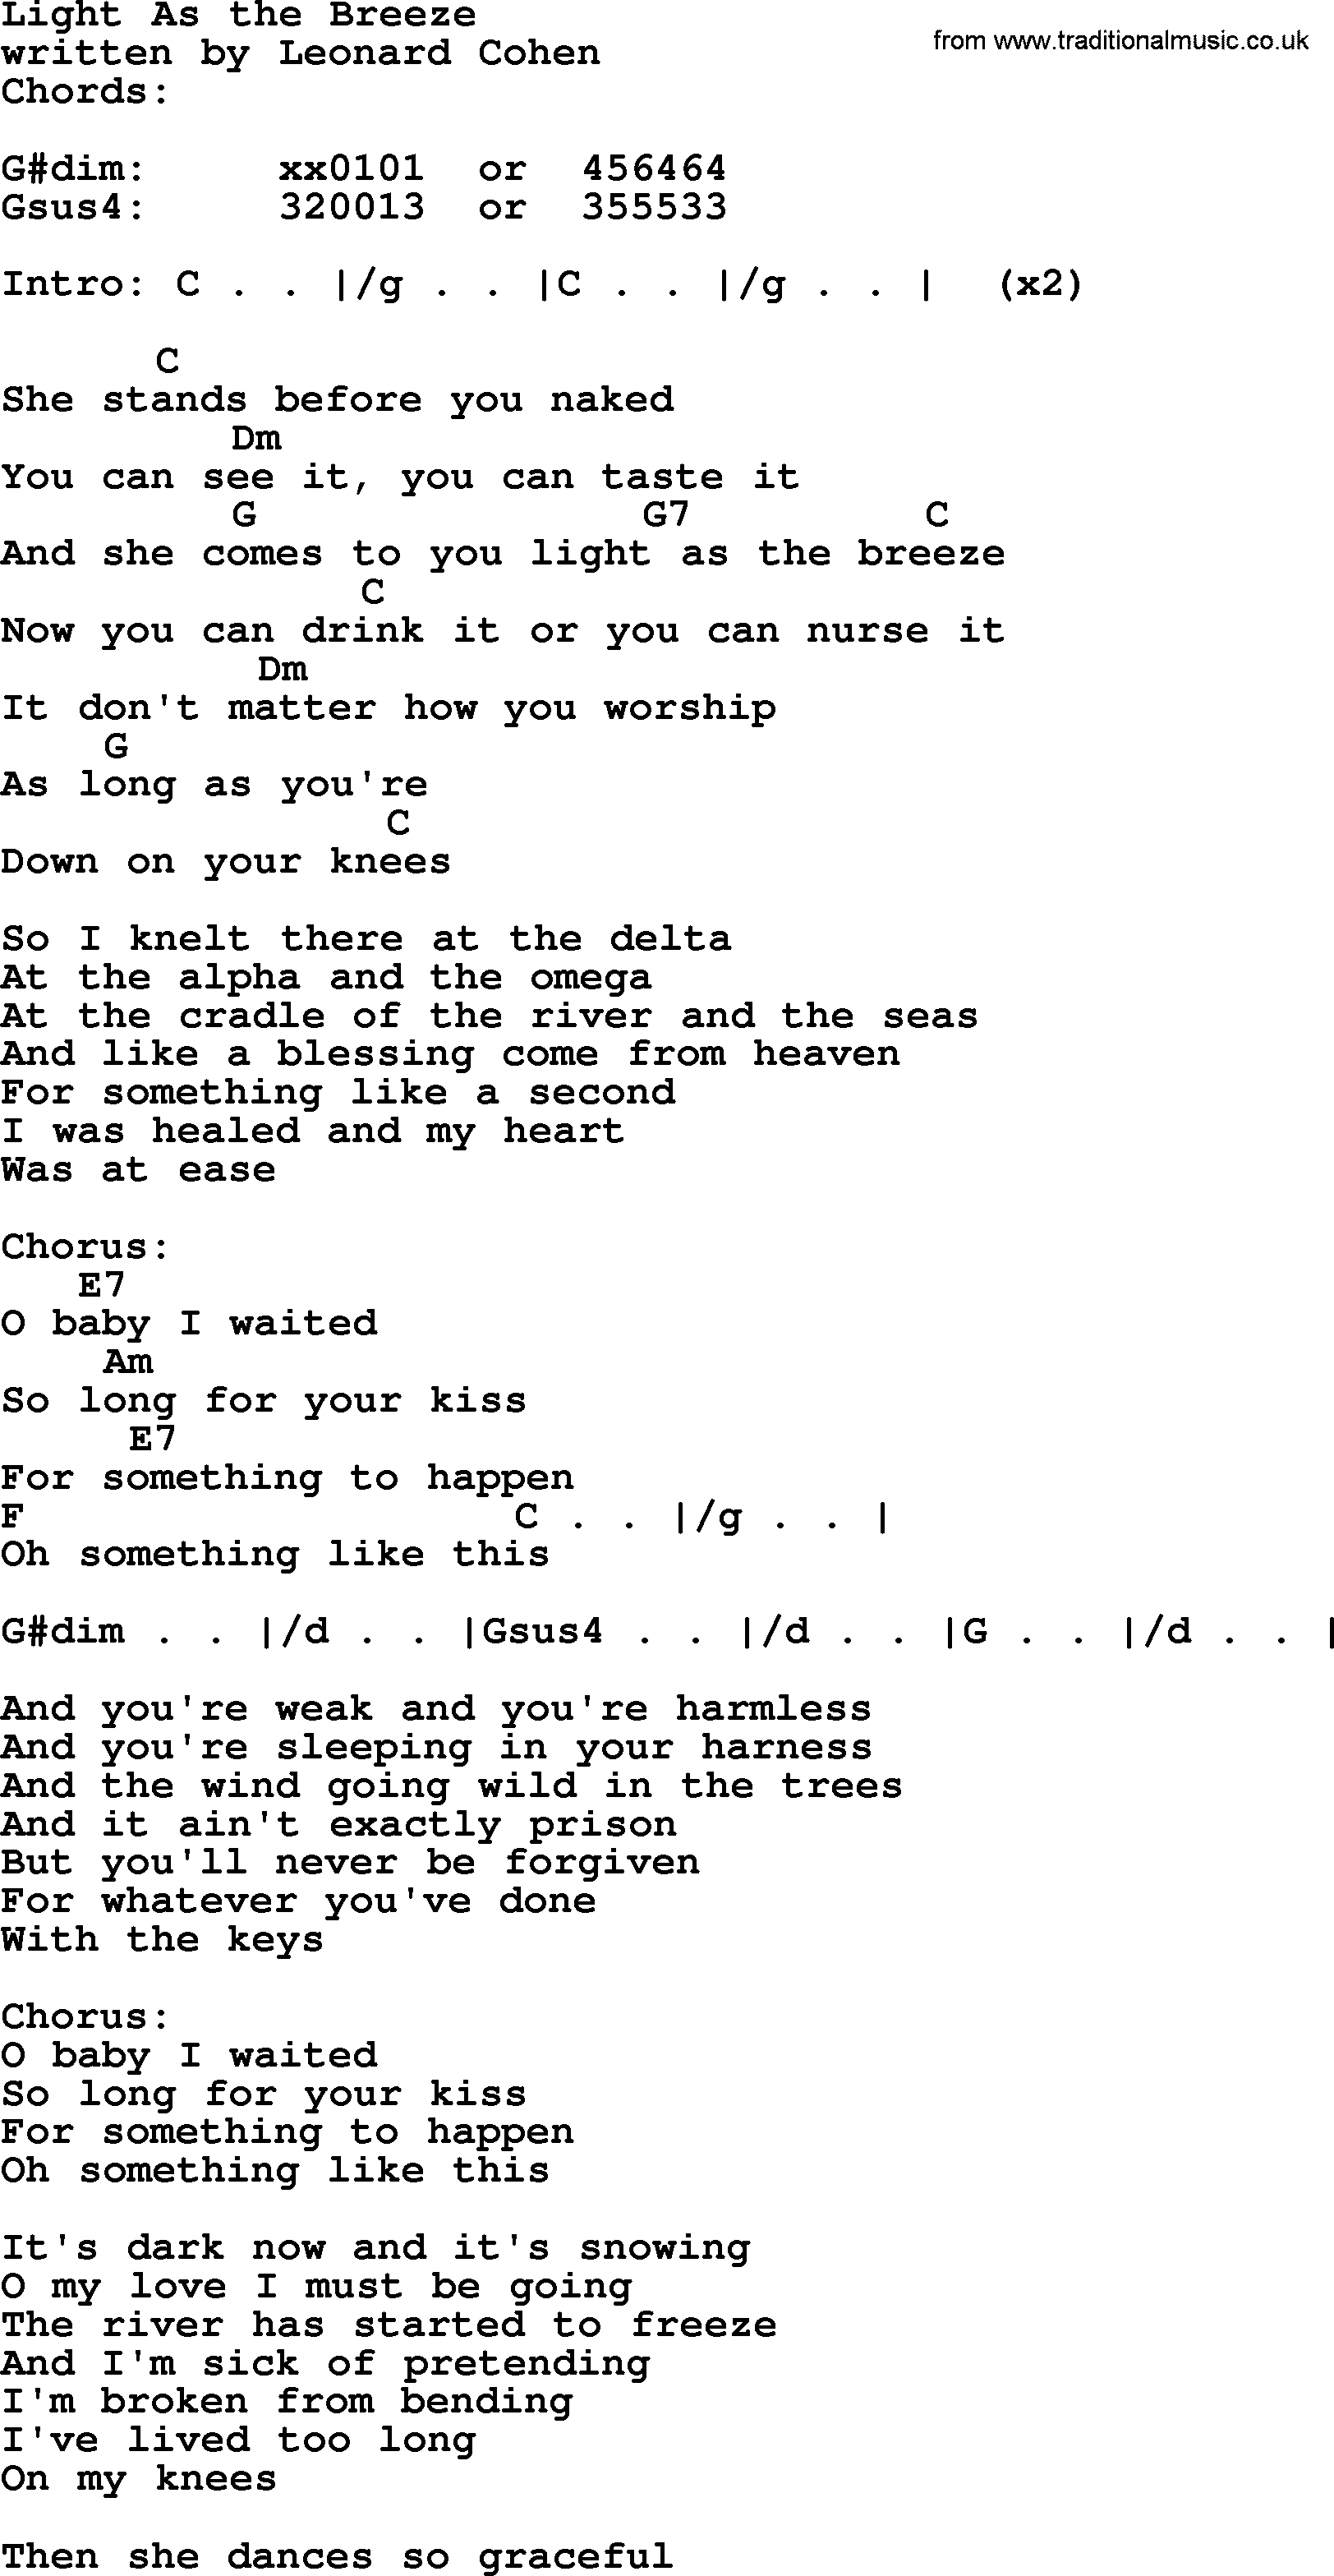 Leonard Cohen song Light As The Breeze, lyrics and chords